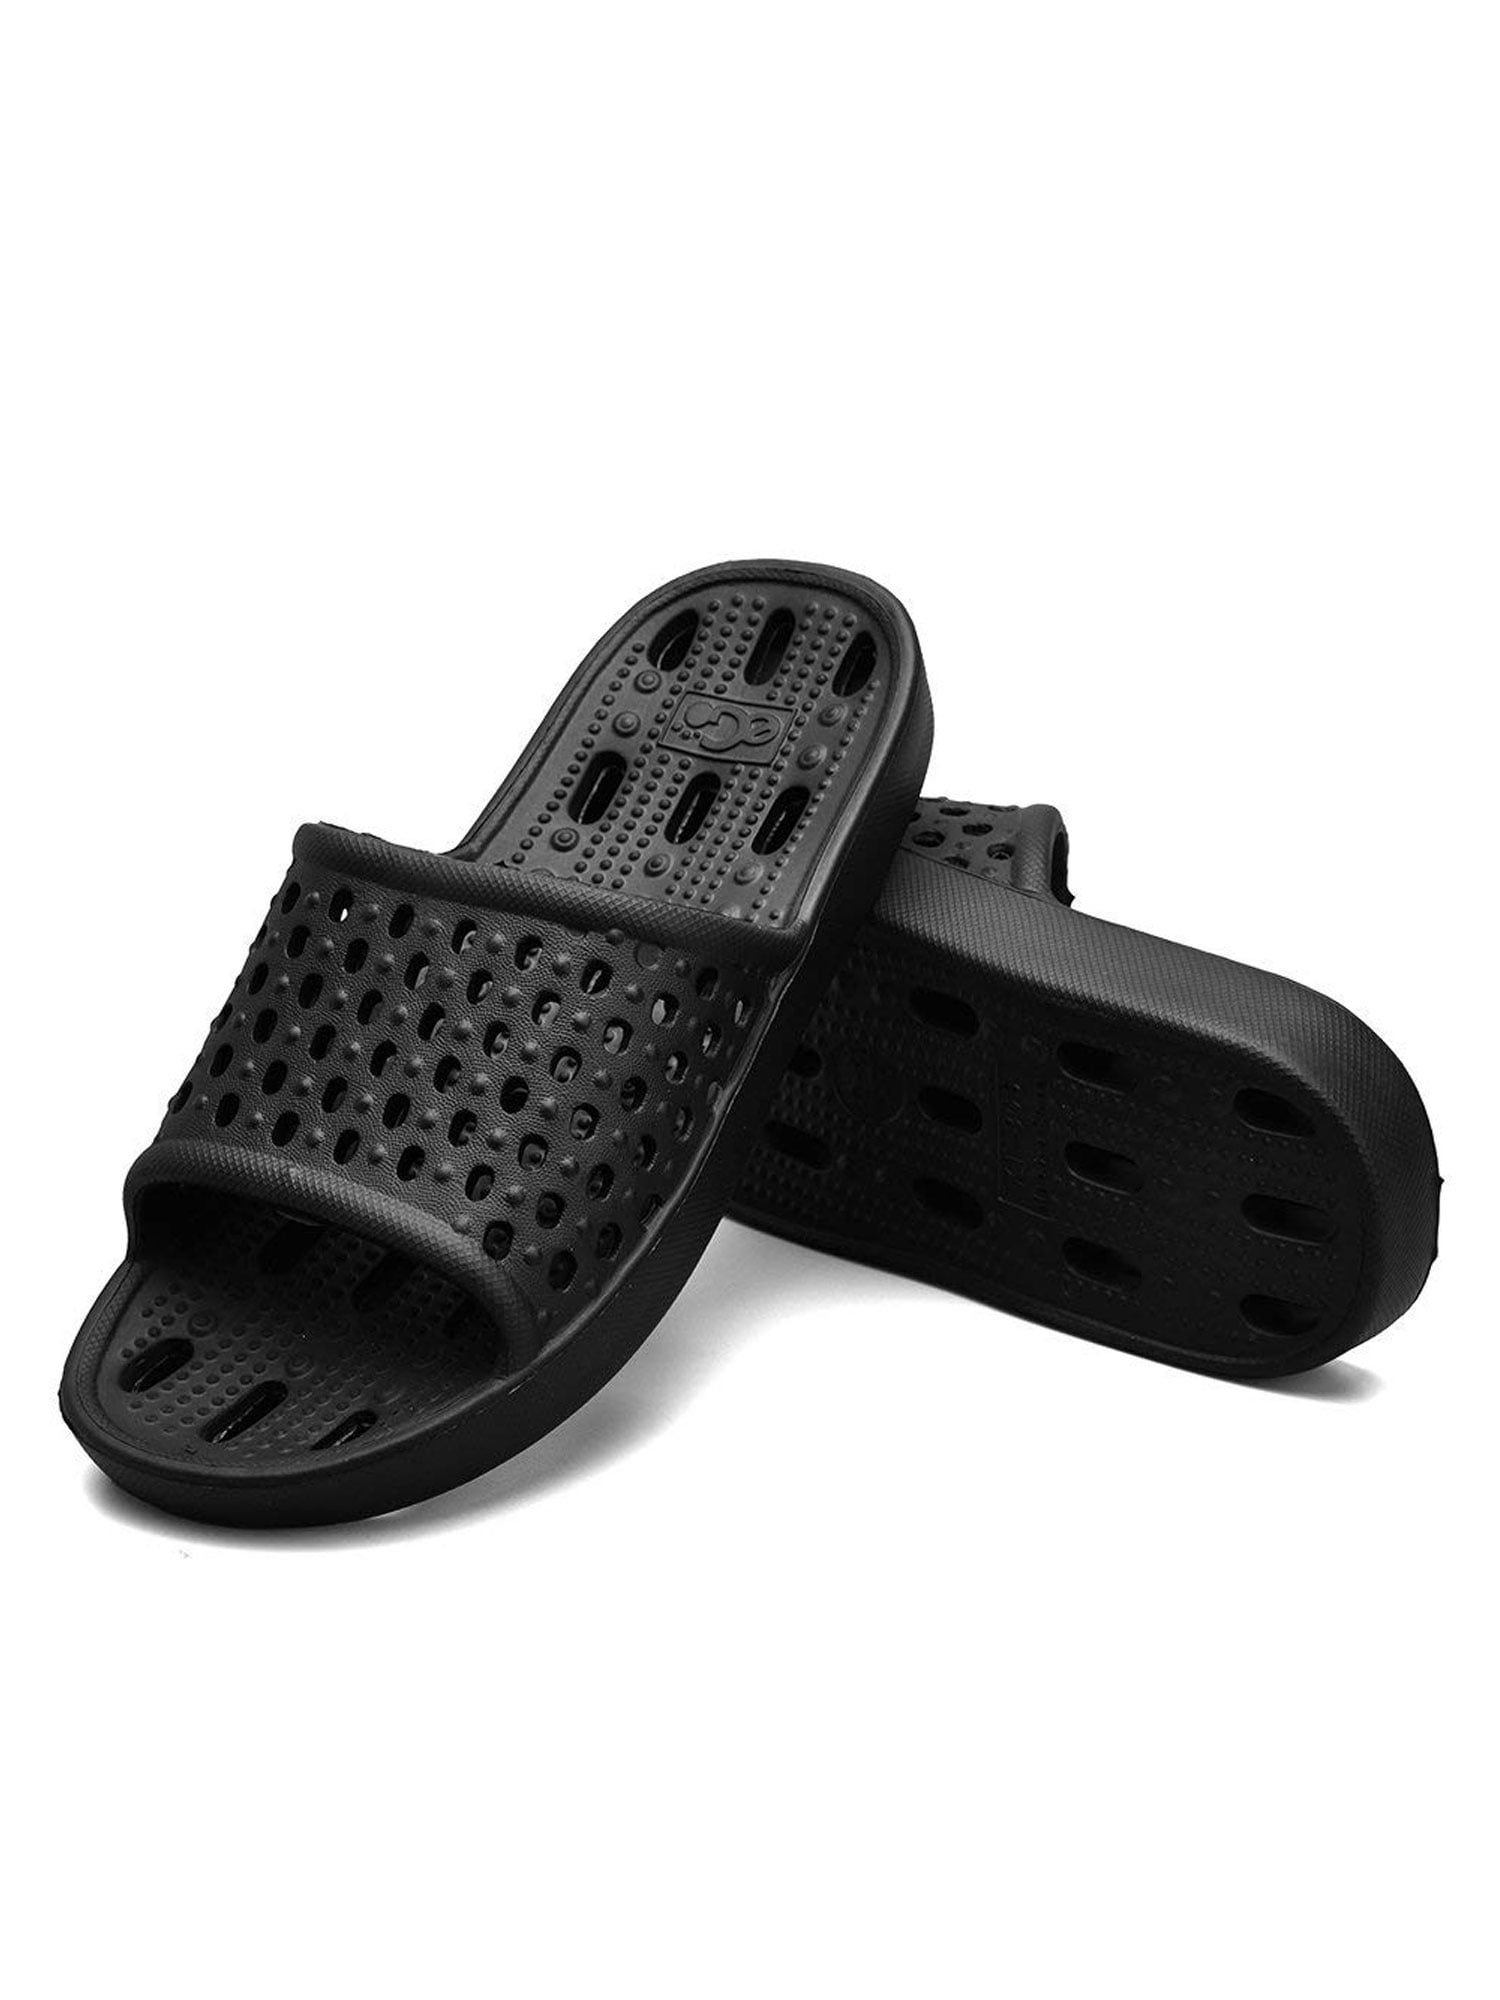 AEMILEN Slippers Women Men Kids Non-Slip Bath Sandals Shower House Mule Soft Foams Sole Pool Shoes Water Shoes for You Health 